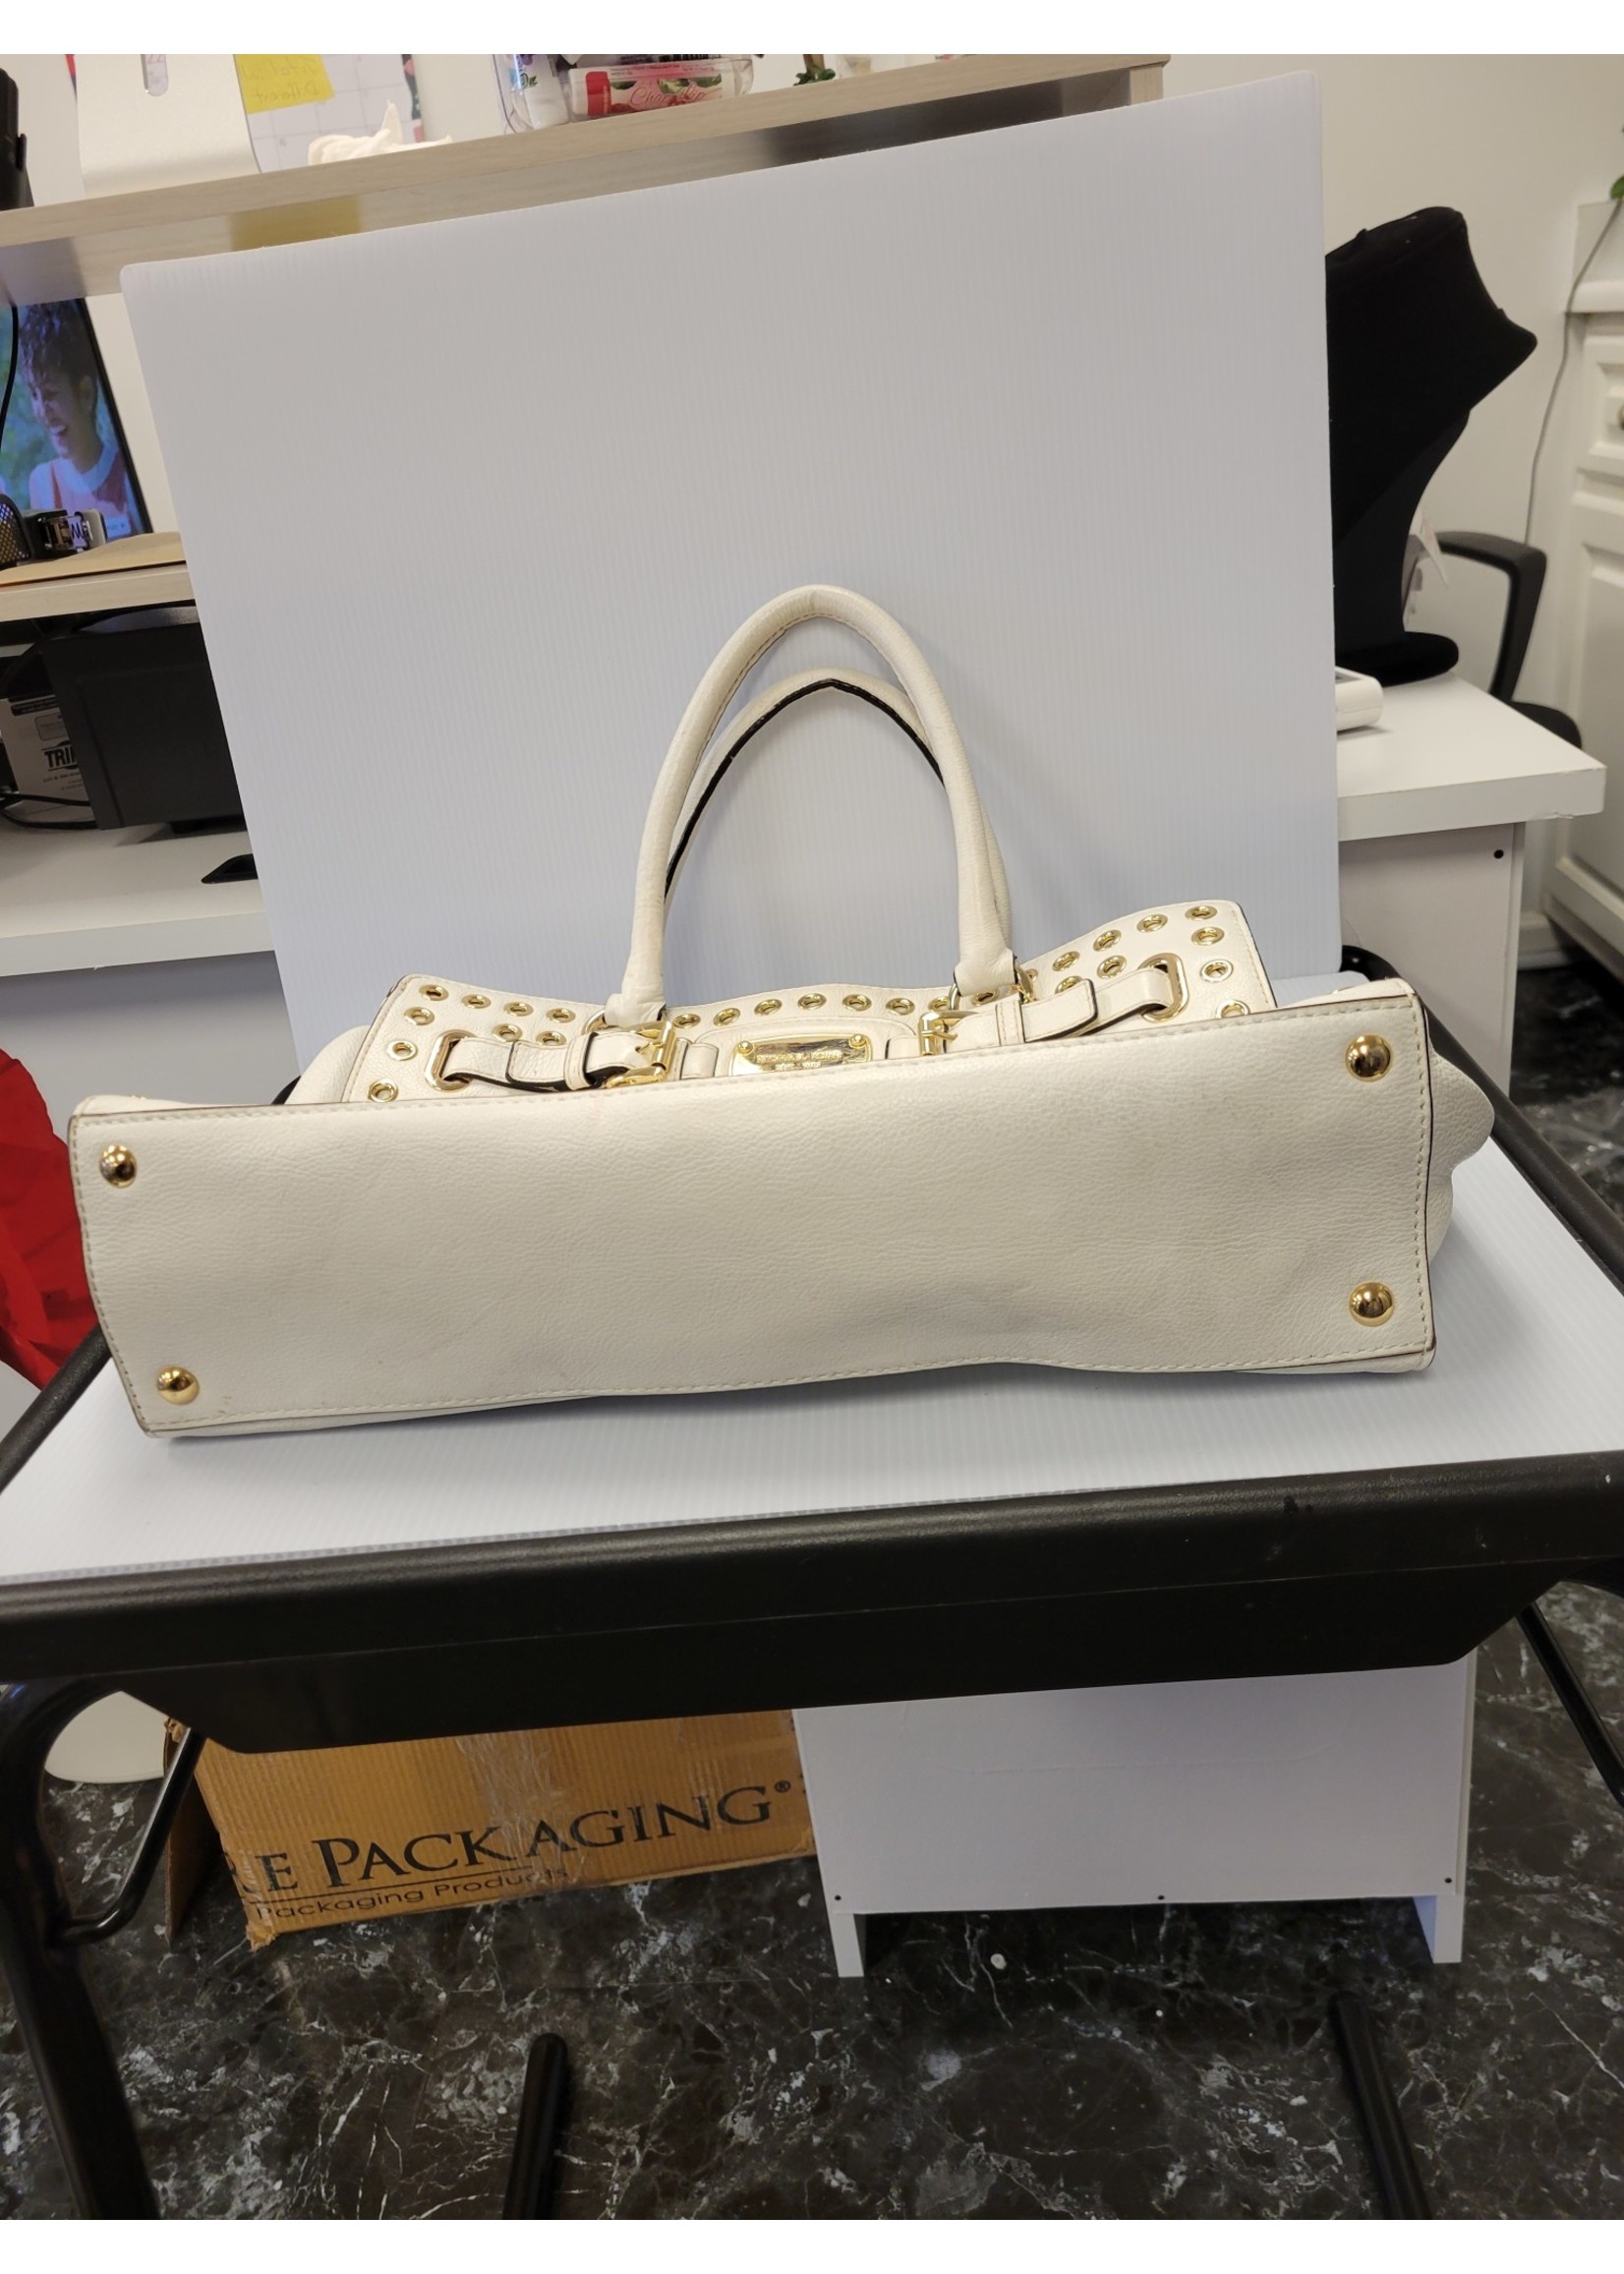 Michael Kors Collection Fuschia Leather Grommet Bag Handbag